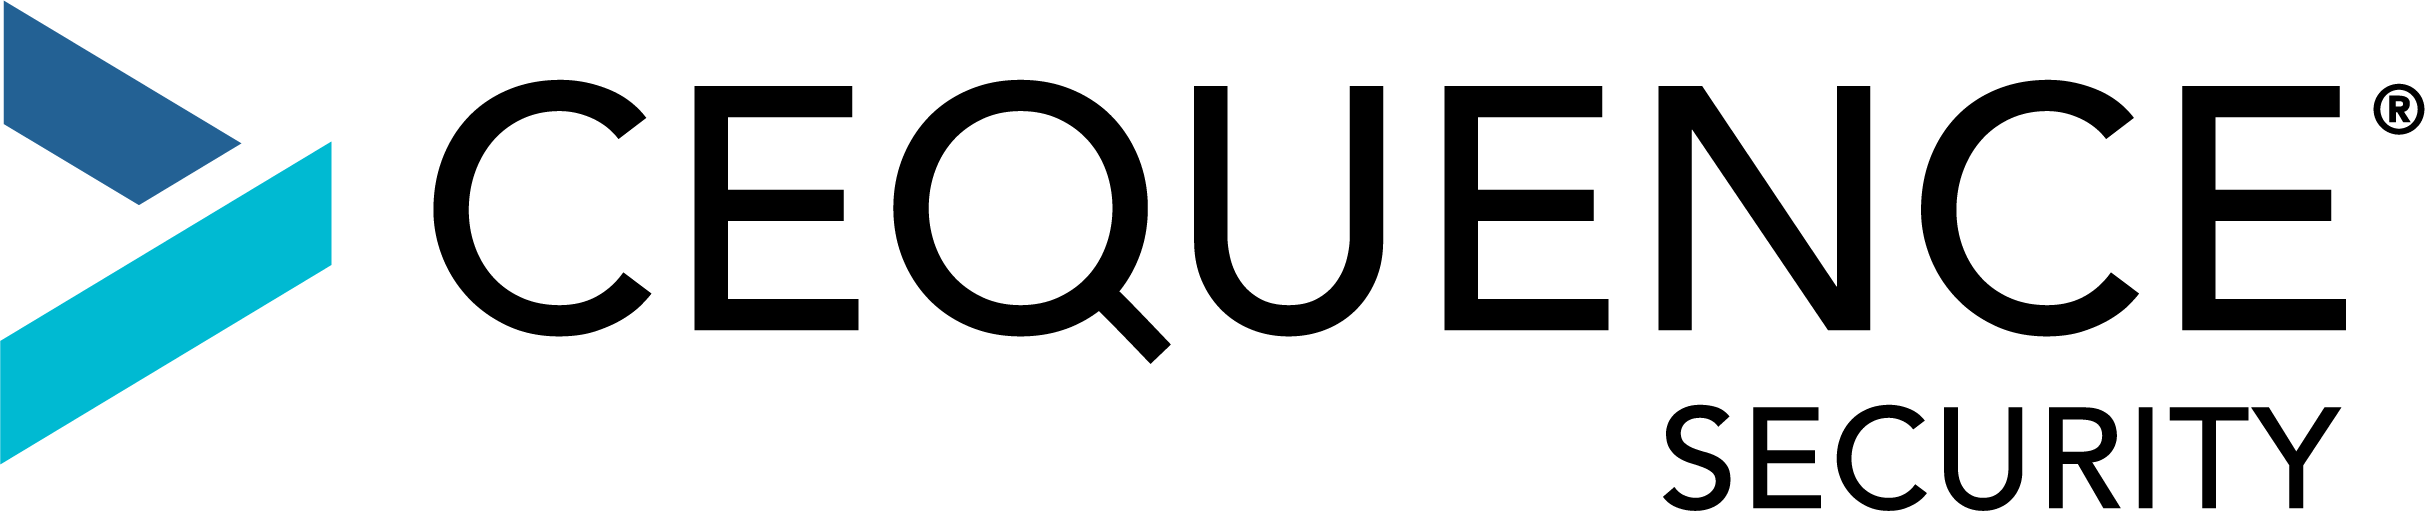 Cequence-logo-blue-horizontal-full-r